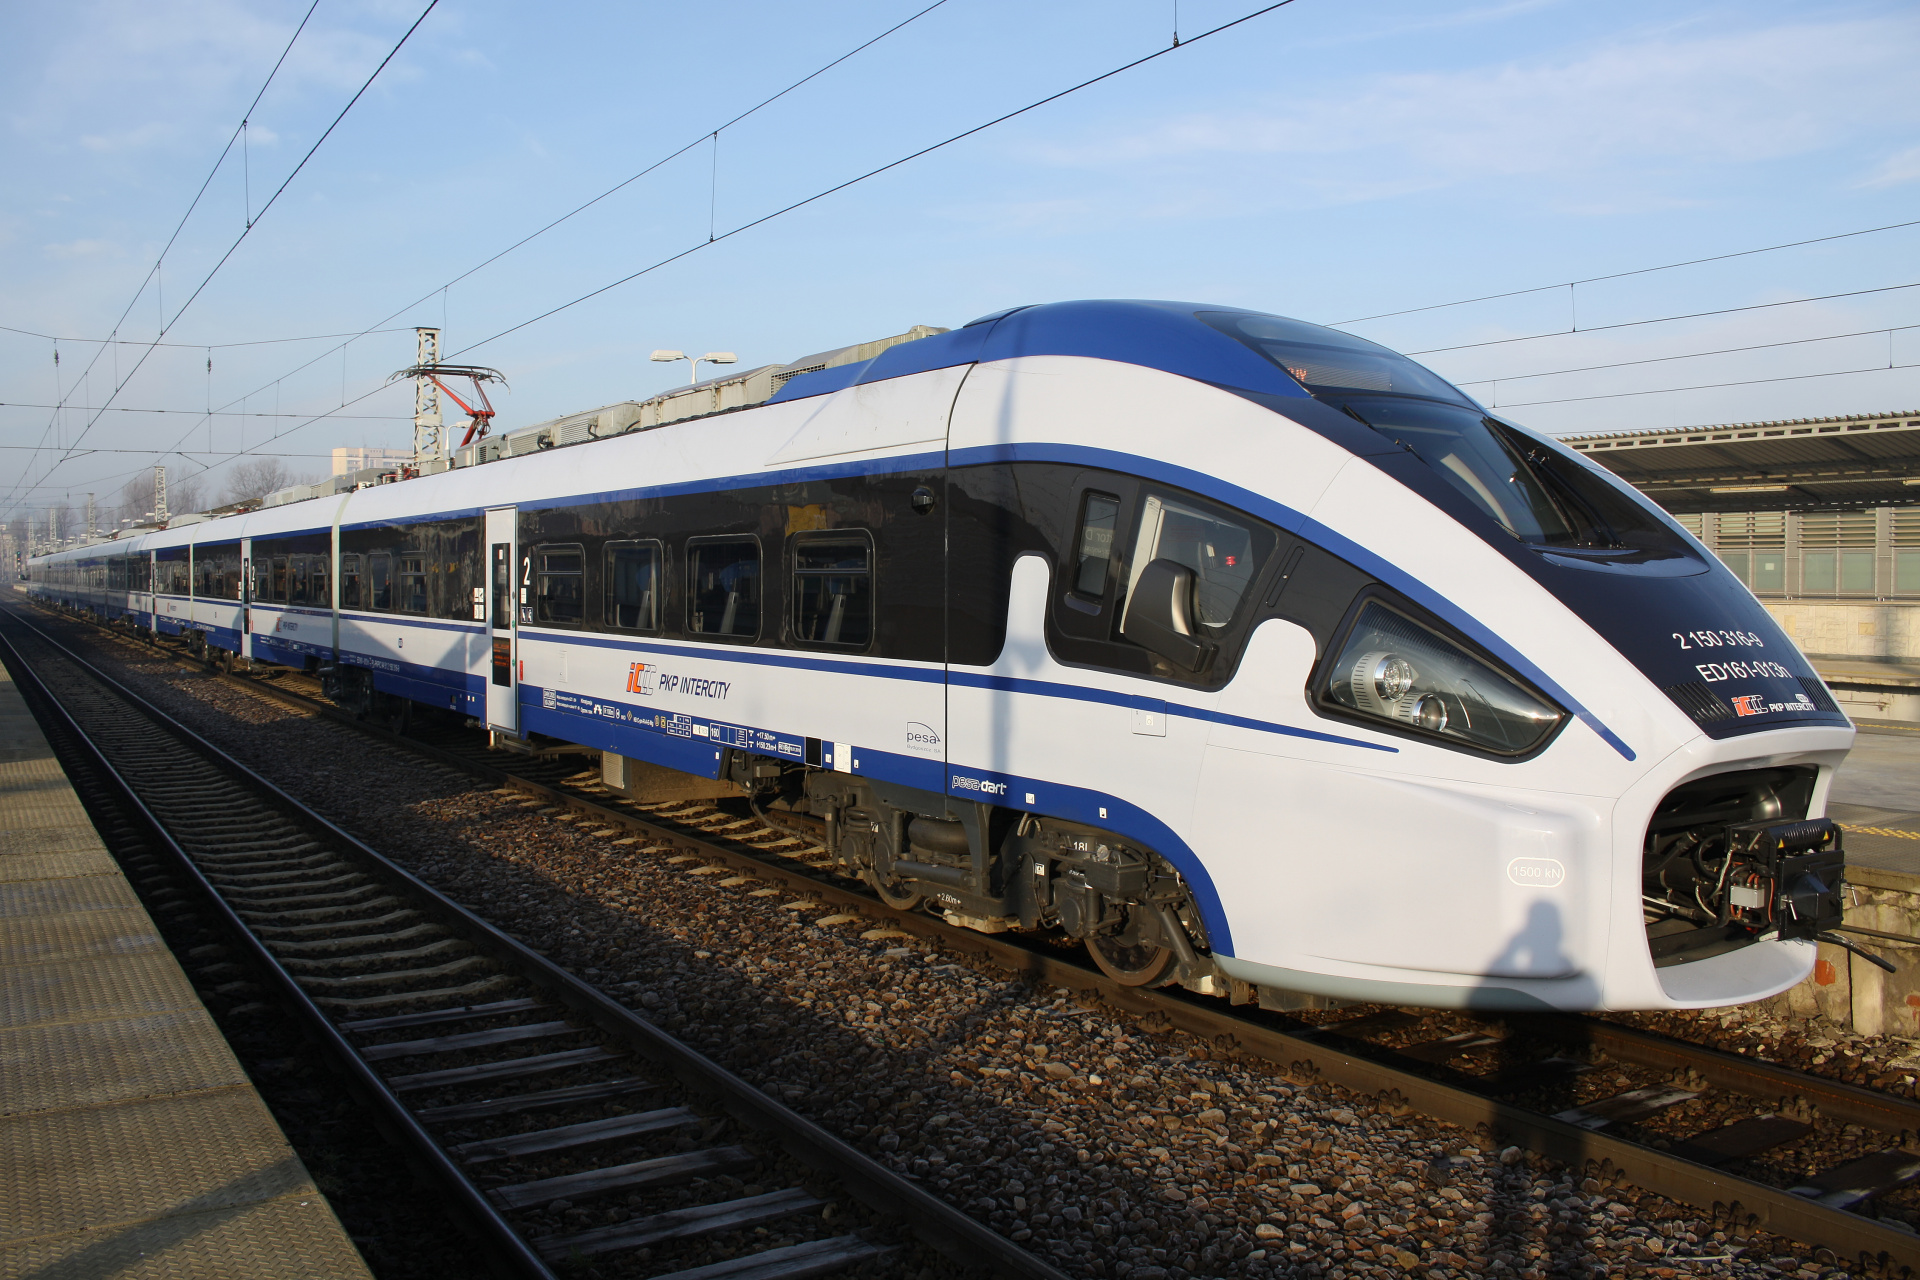 43WE ED161-013 (Vehicles » Trains and Locomotives » Pesa Dart)